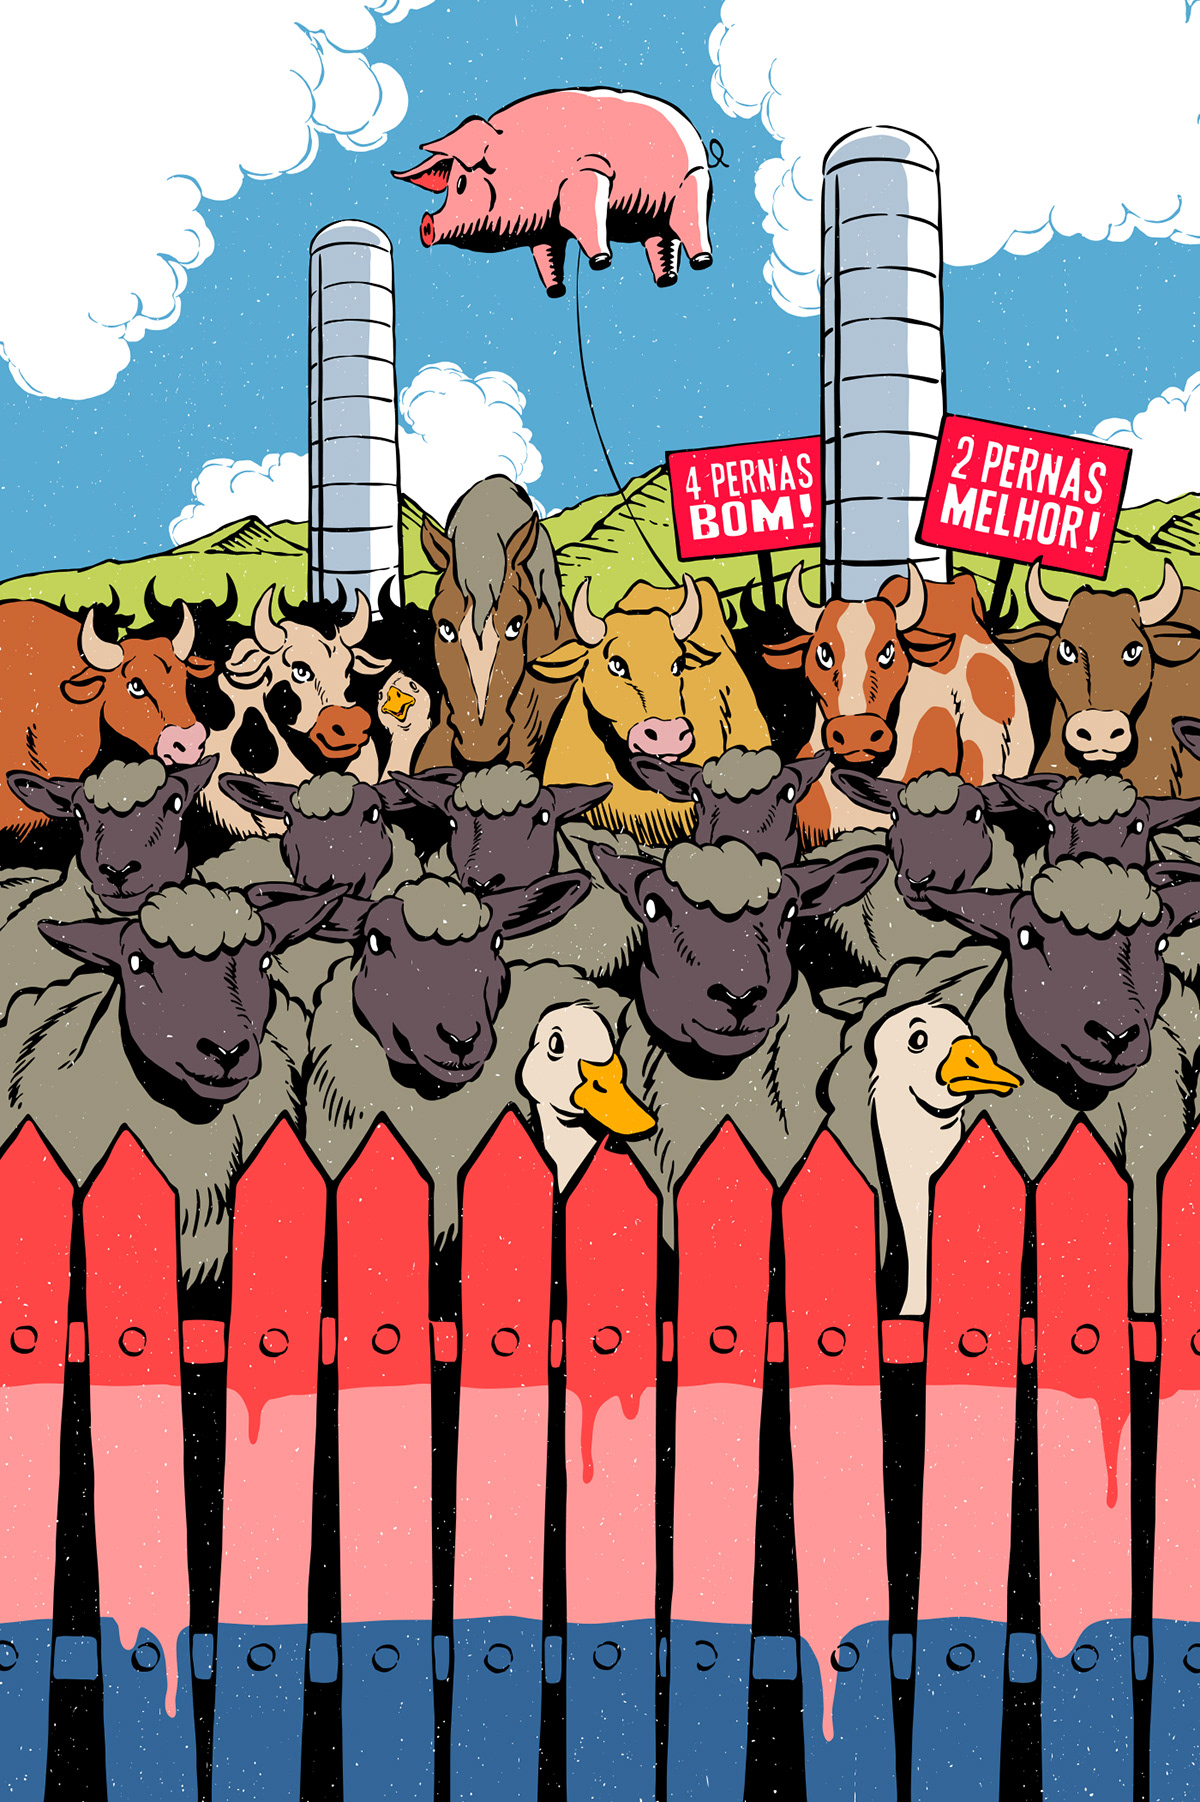 Animal Farm Dystopia George Orwell Orwell animals Donald Trump Maga make america great again pink floyd Trump